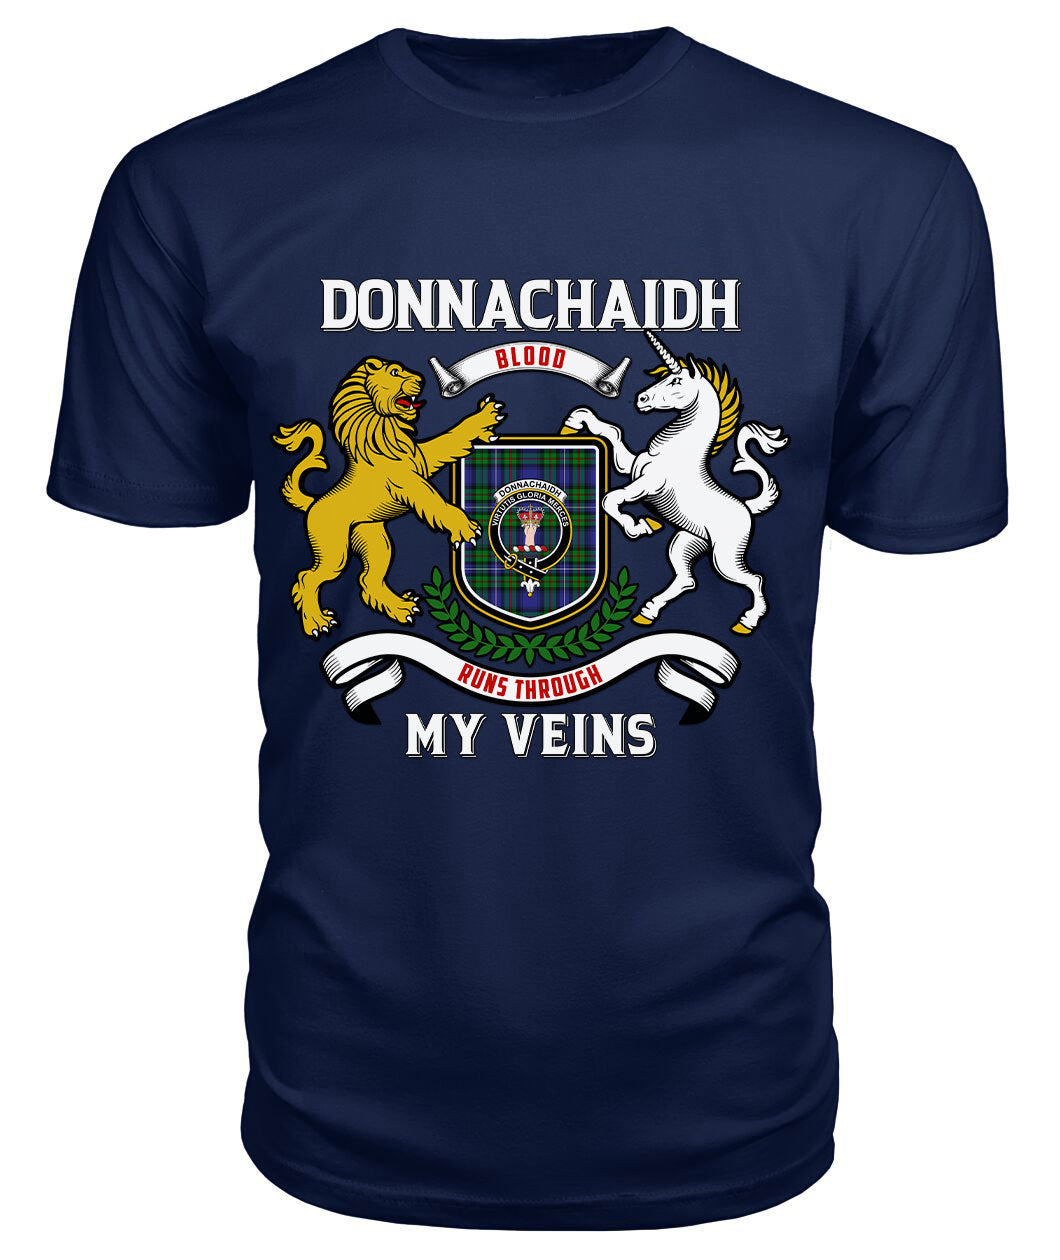 Donnachaidh Tartan Crest 2D T-shirt - Blood Runs Through My Veins Style